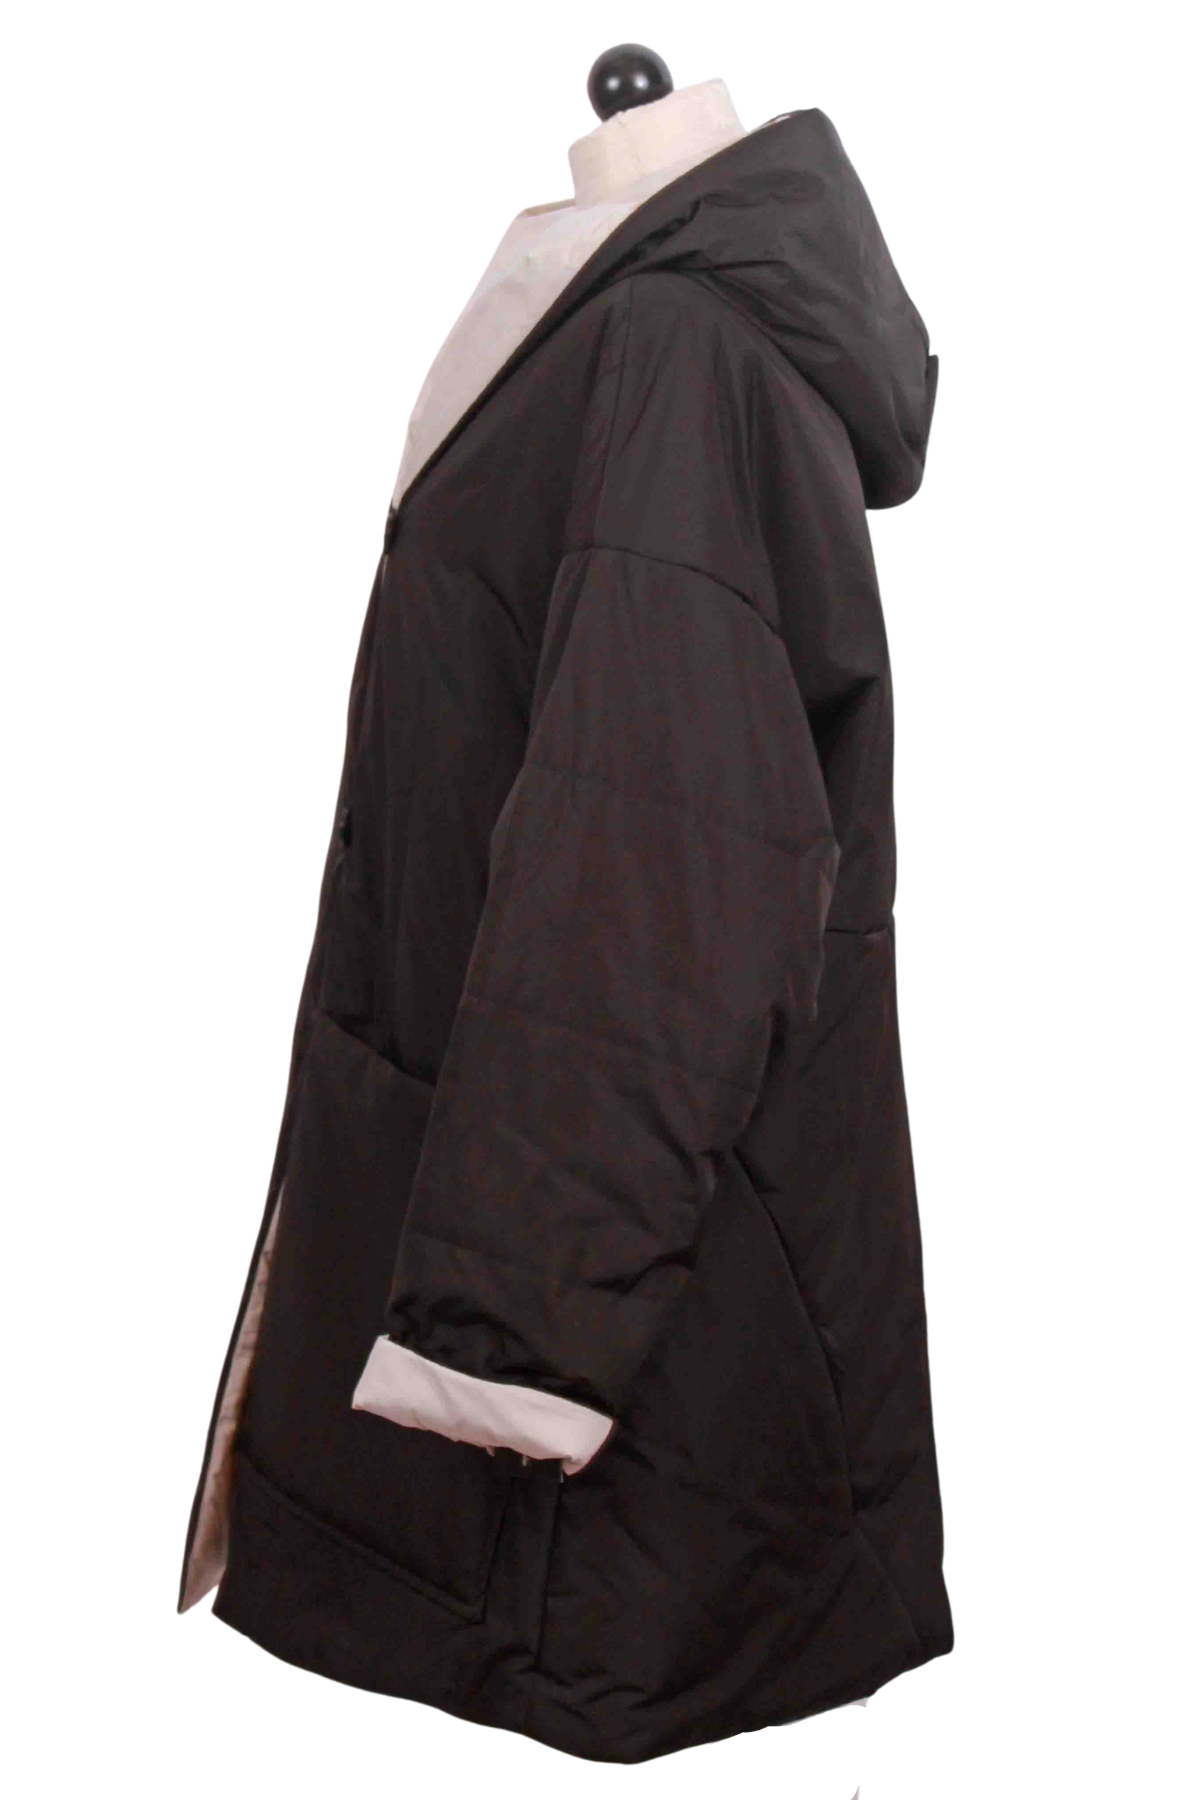 side view of Black/Sand Hooded Reversible Puffy Coat by Nikki Jones